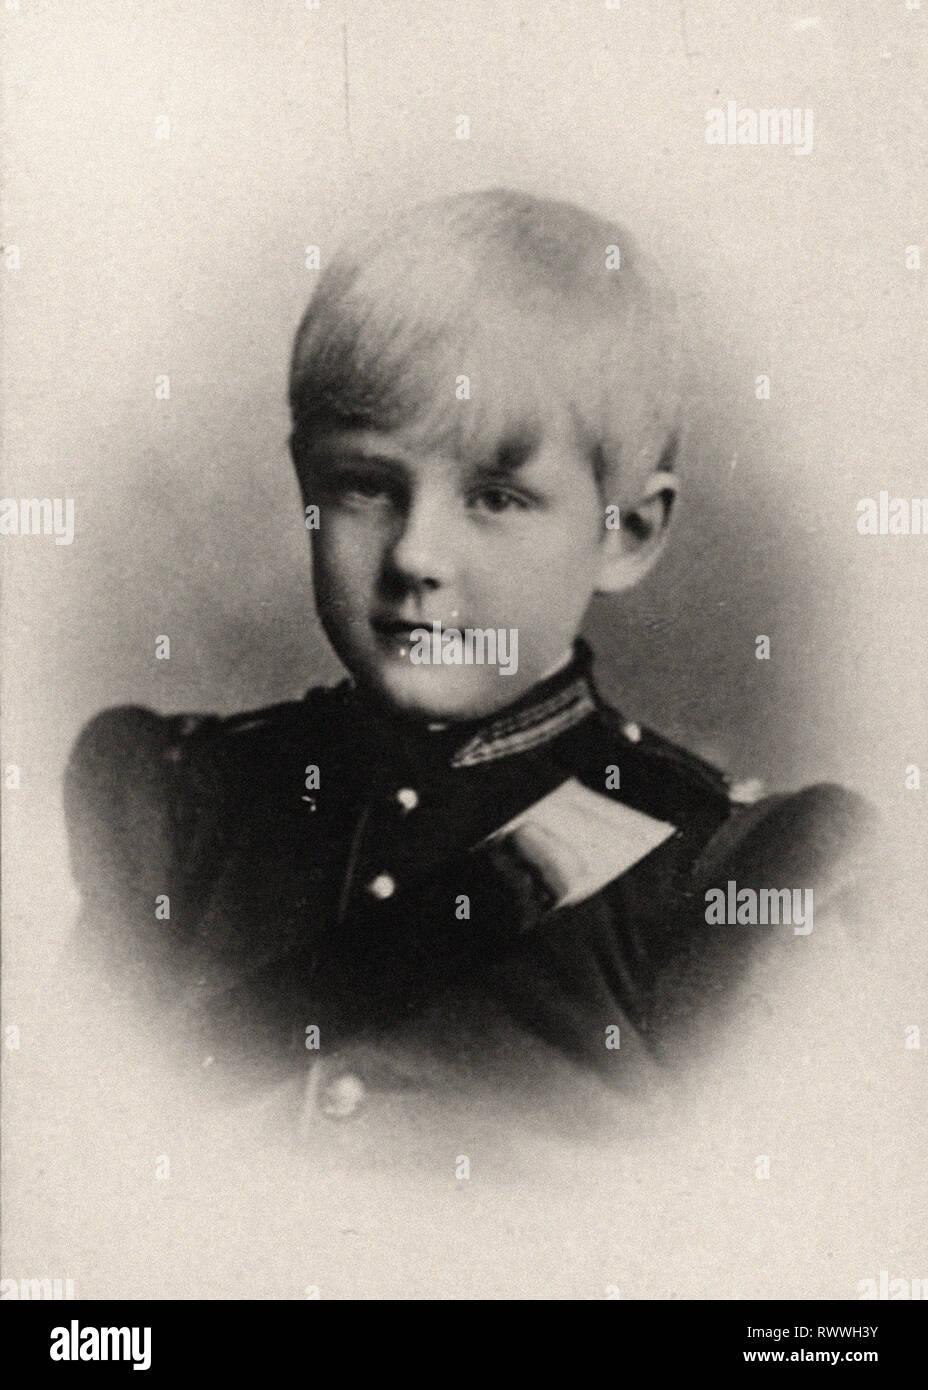 Photographic portrait of Louis Philippe, prince de Portugal Stock Photo